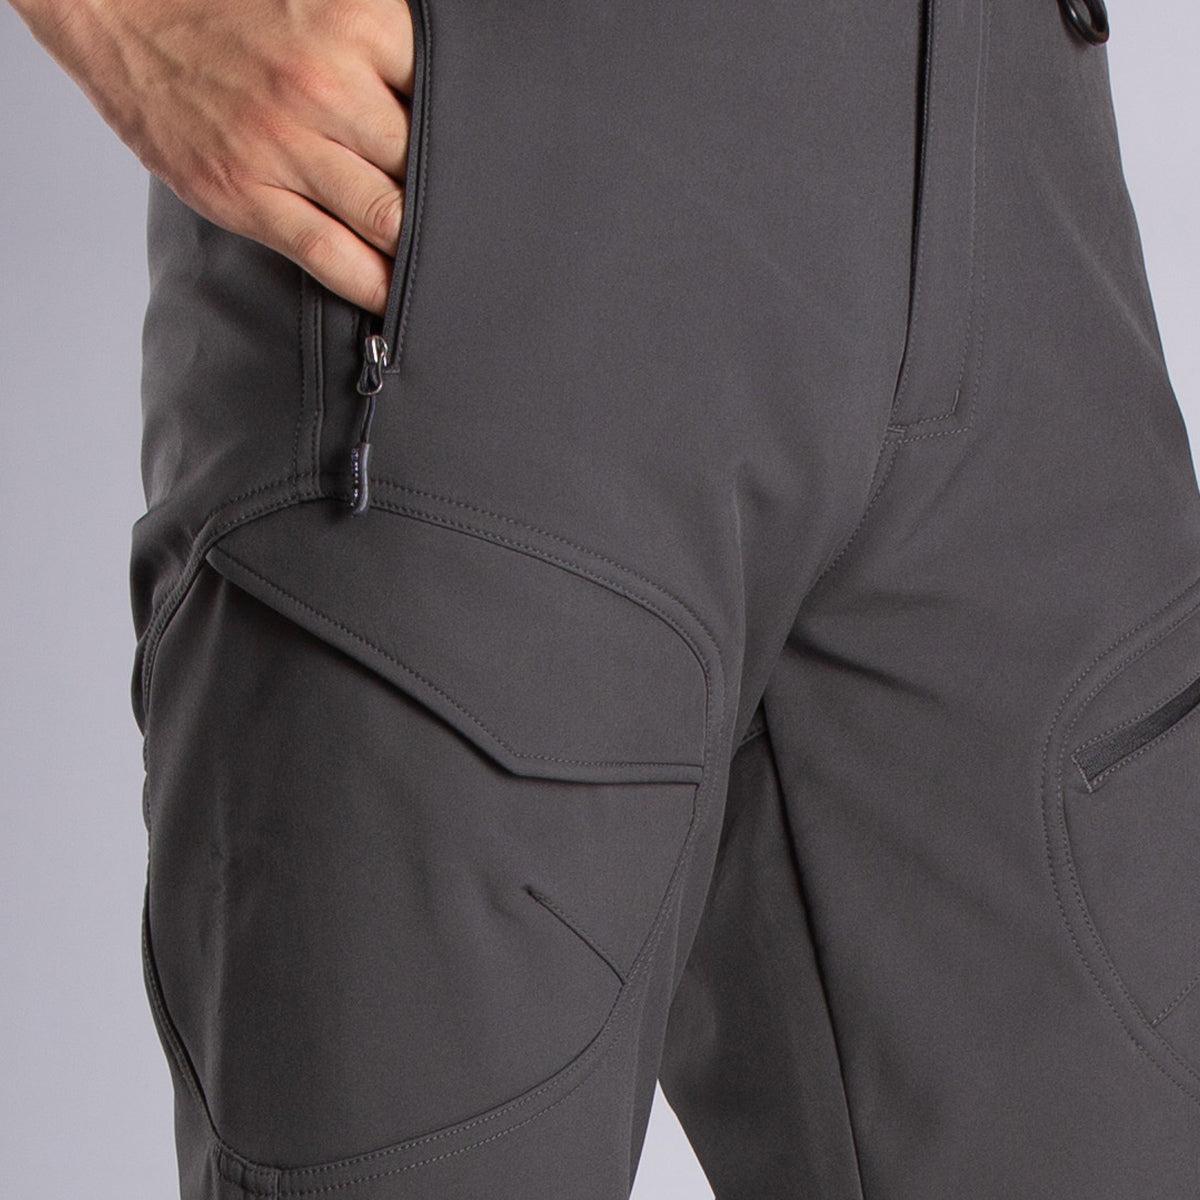 Men's Softshell Fleece Lined Cargo Pants with Belt